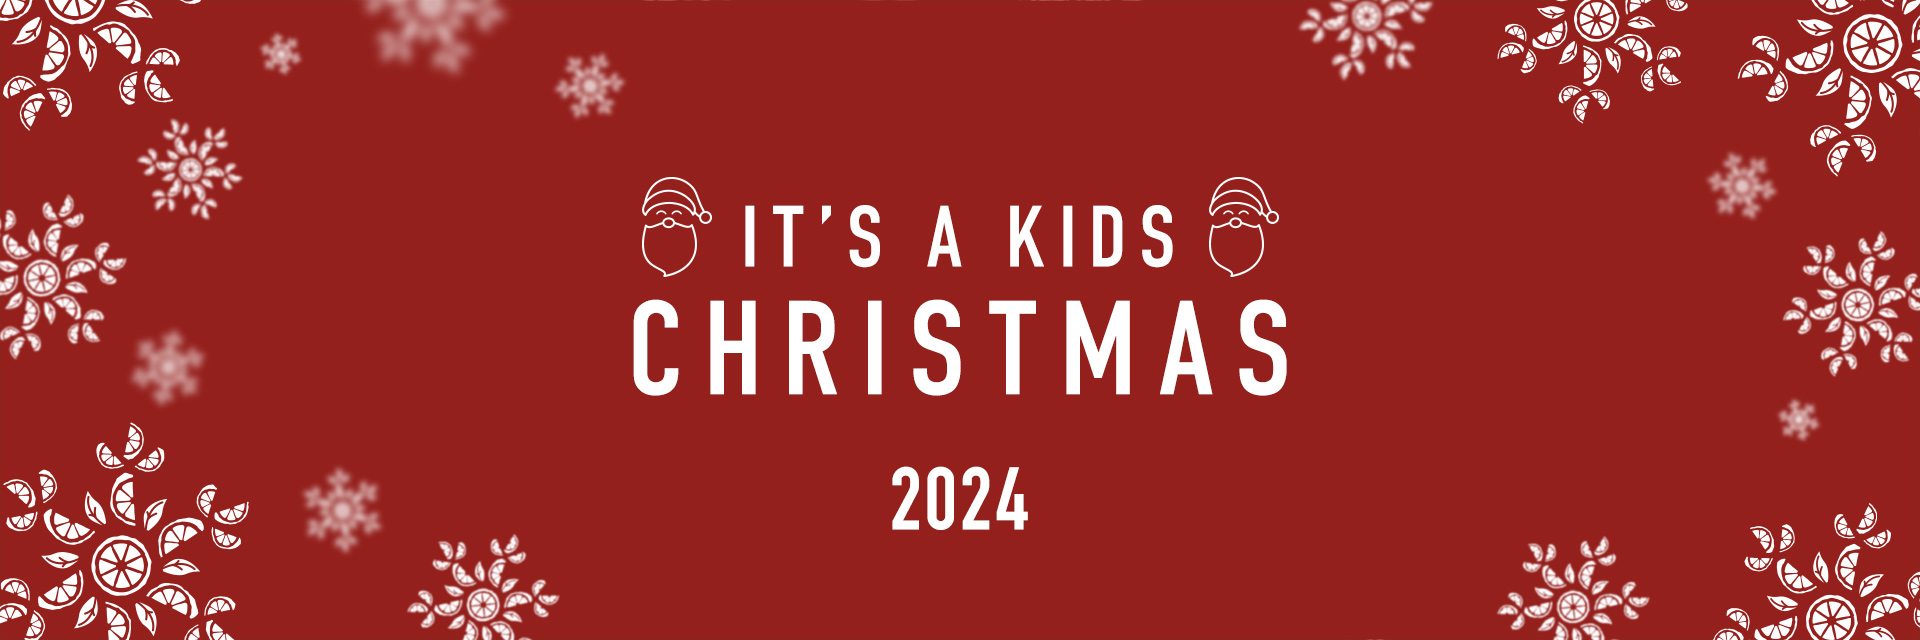 Kids Christmas Menu 2024 at Harvester Cardiff Bay